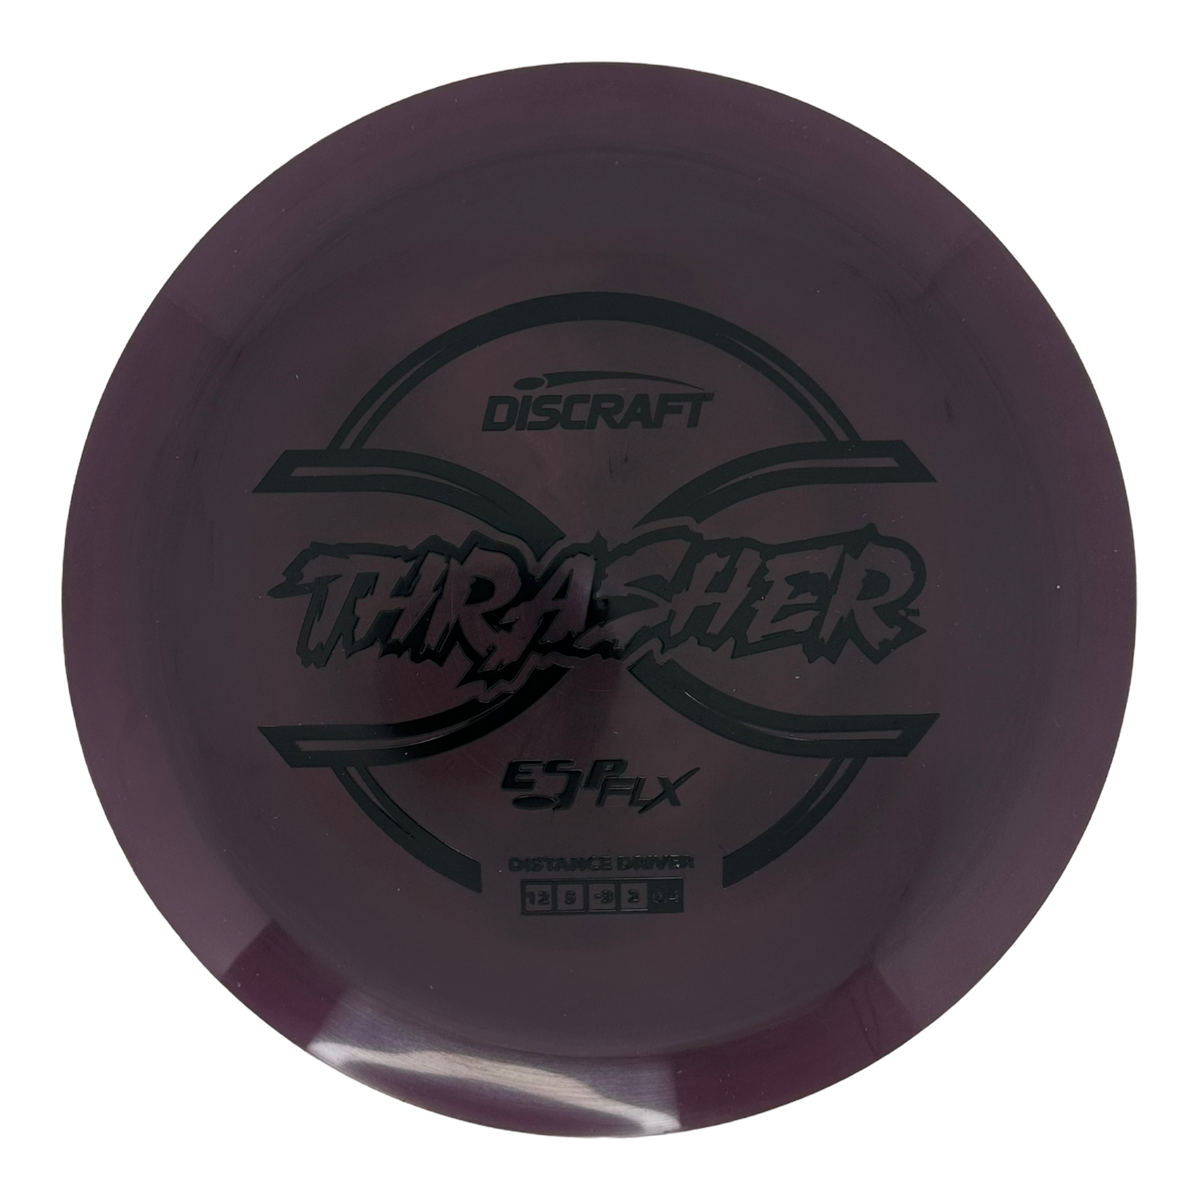 Discraft ESP FLX Thrasher